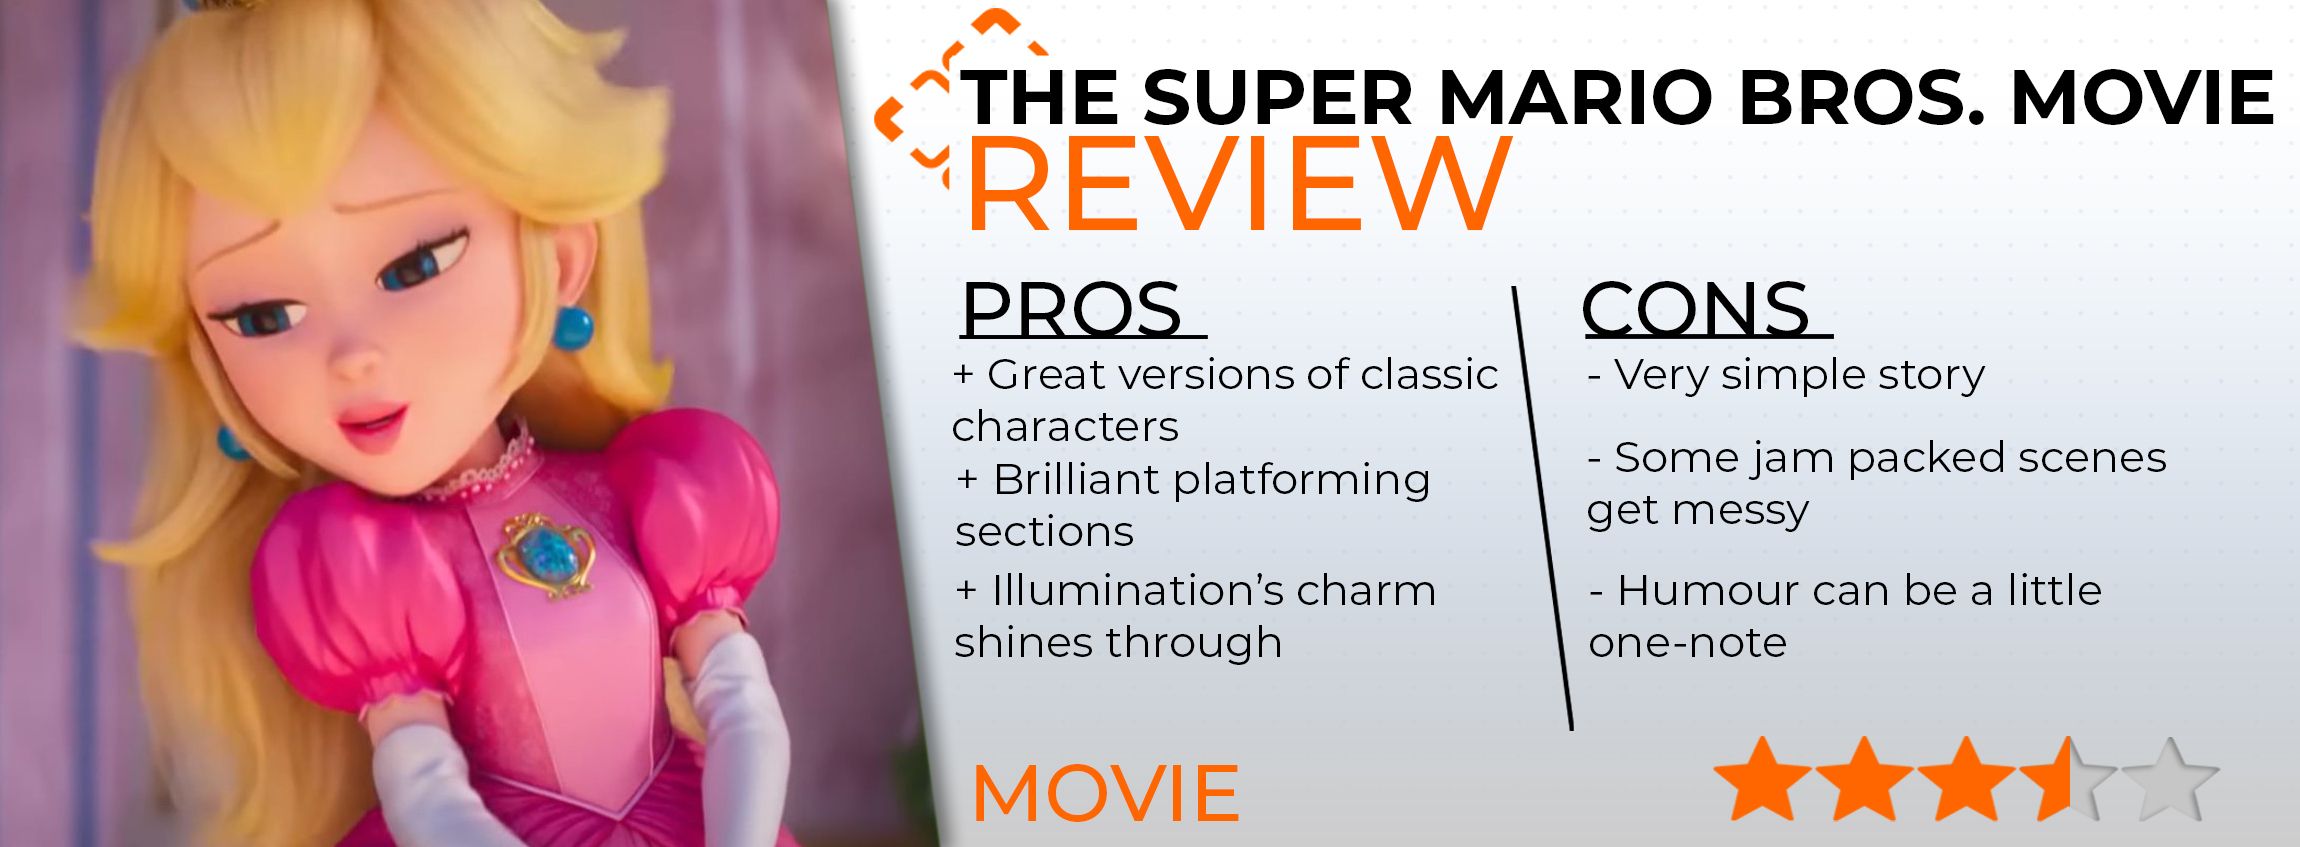 Mario movie review card score 3.5/5